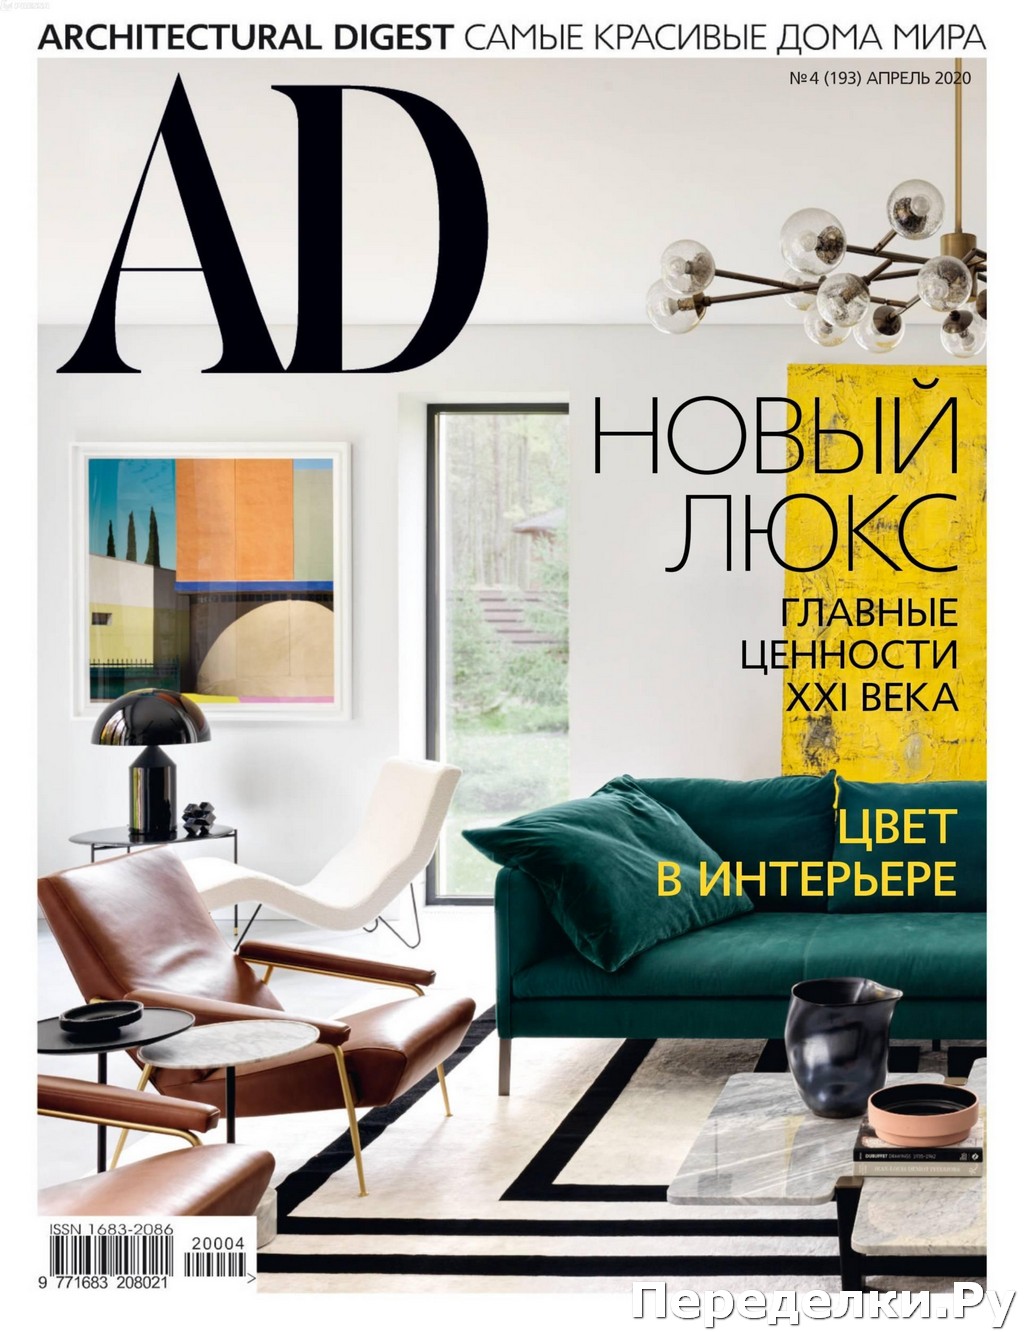 AD Architectural Digest 4 aprel 2020 1